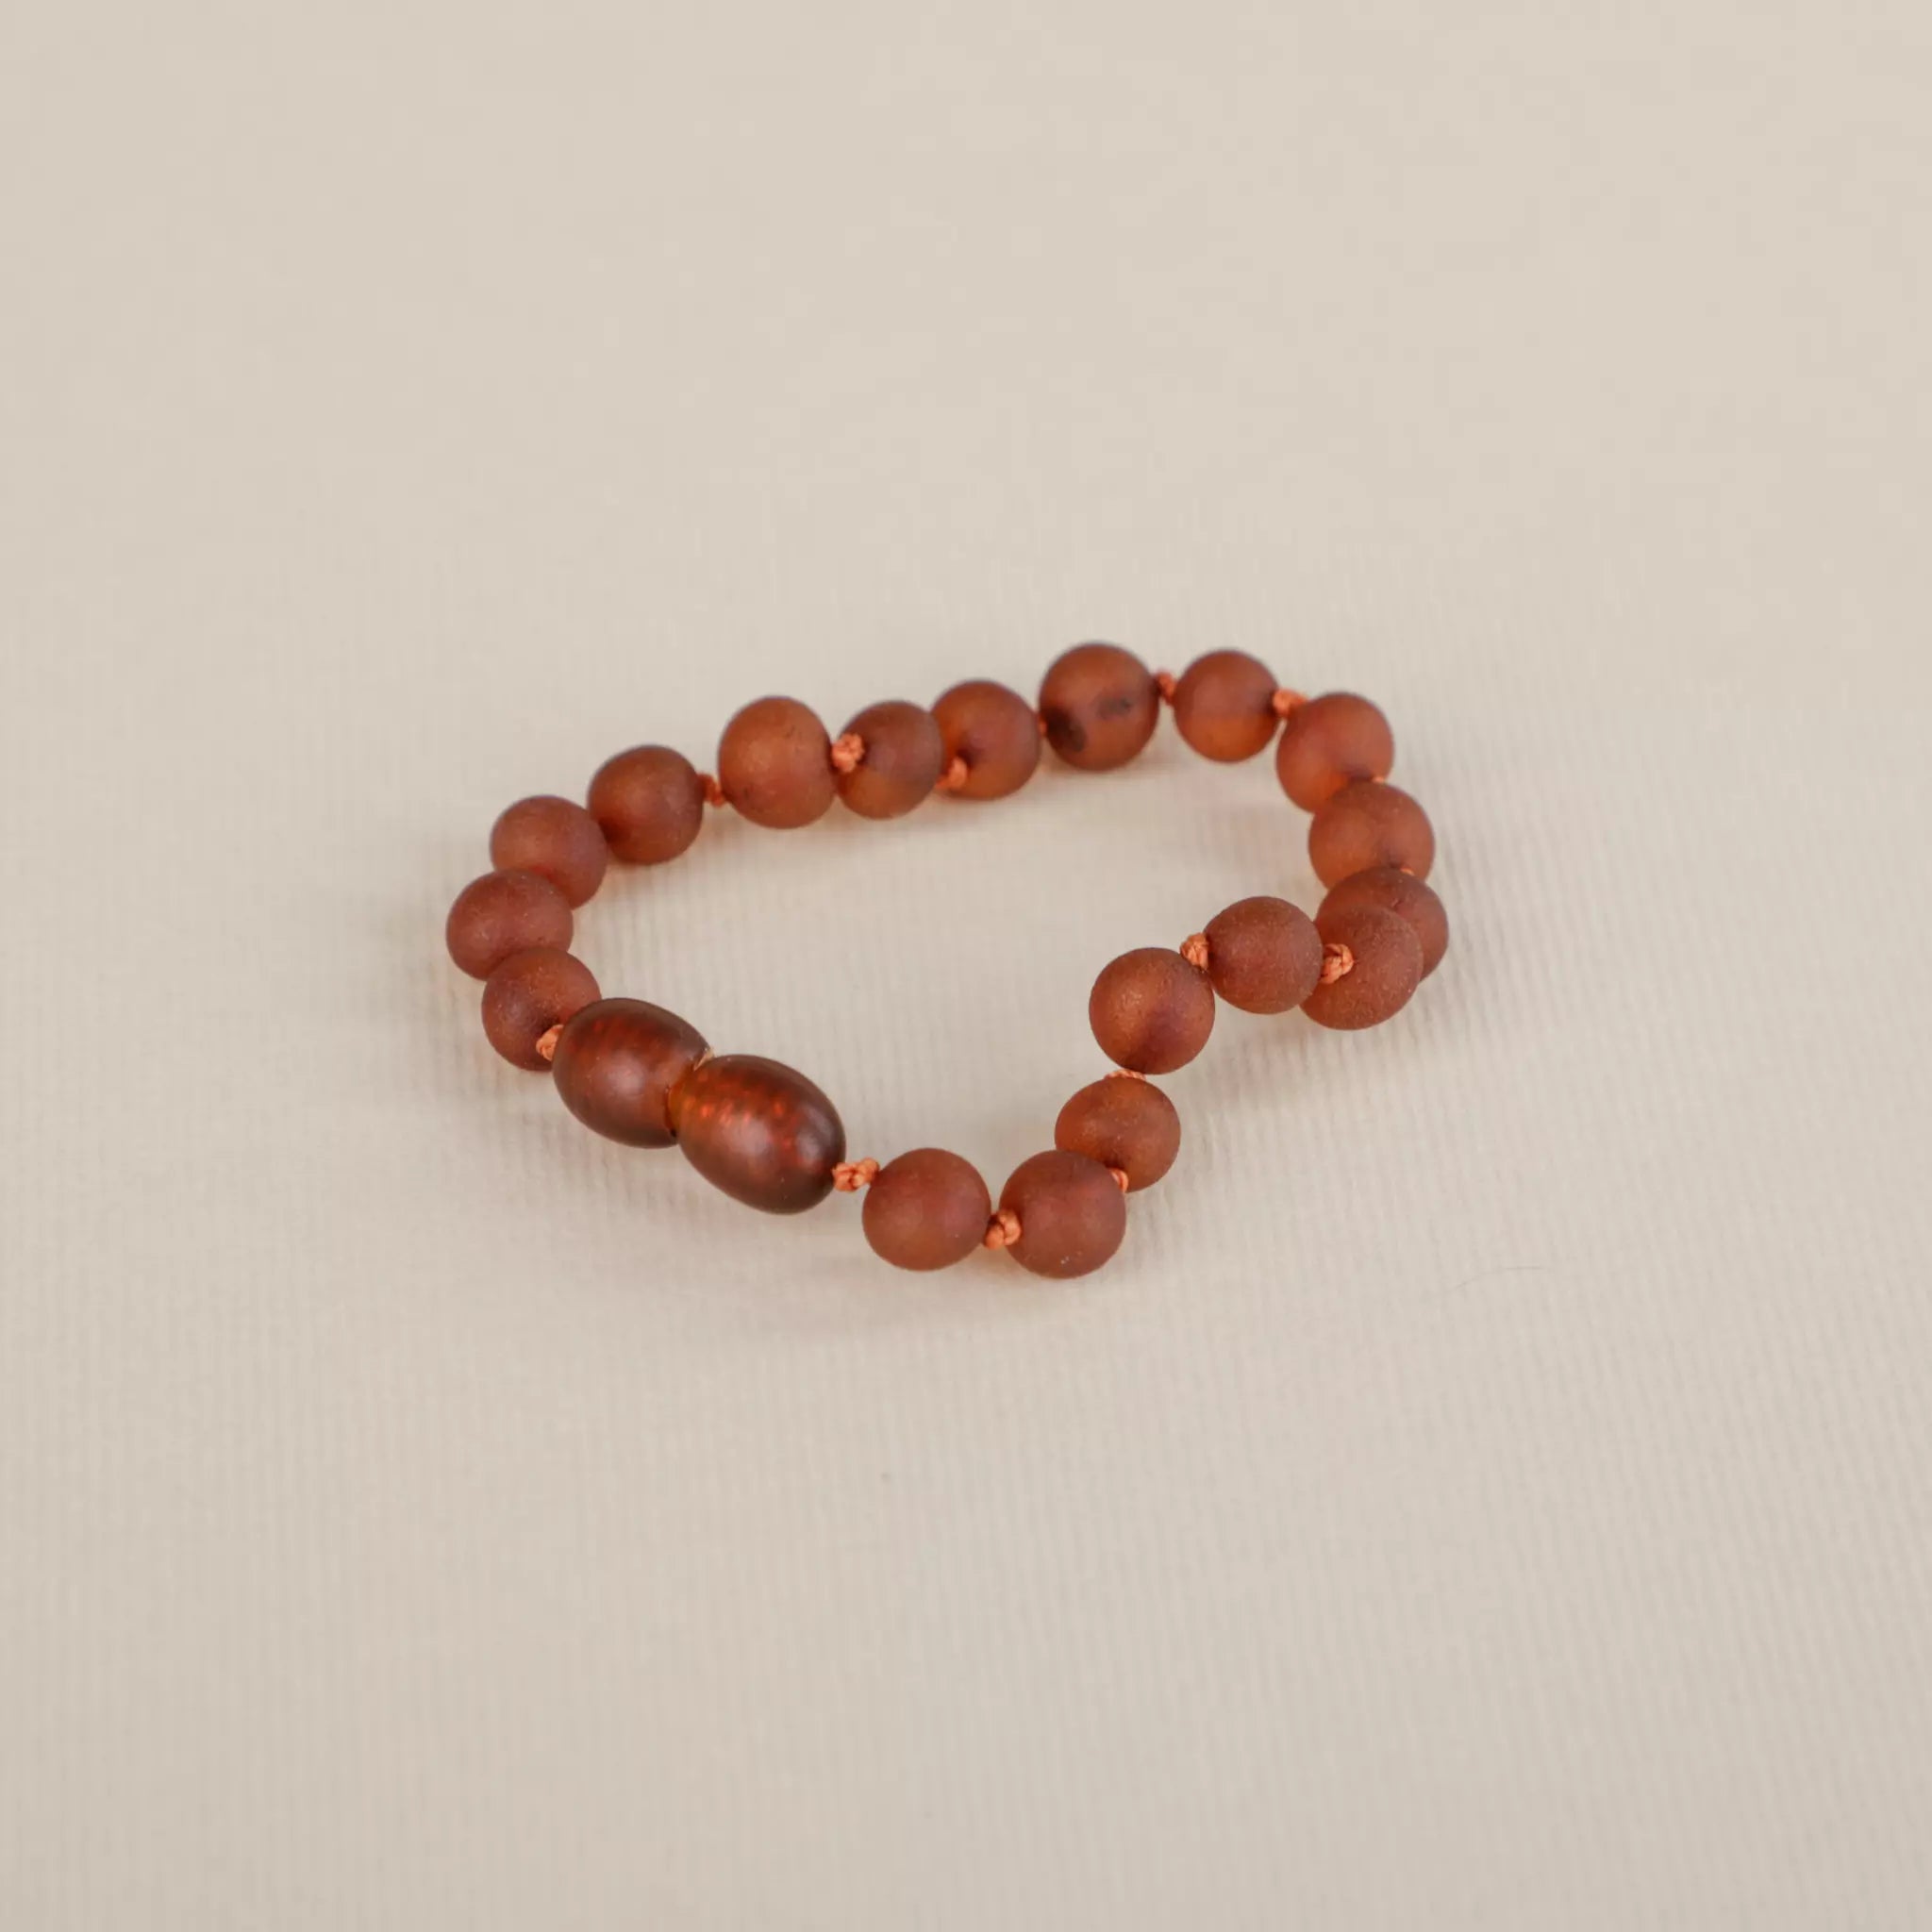 Rose quartz raw unpolished amber teething bracelet or anklet